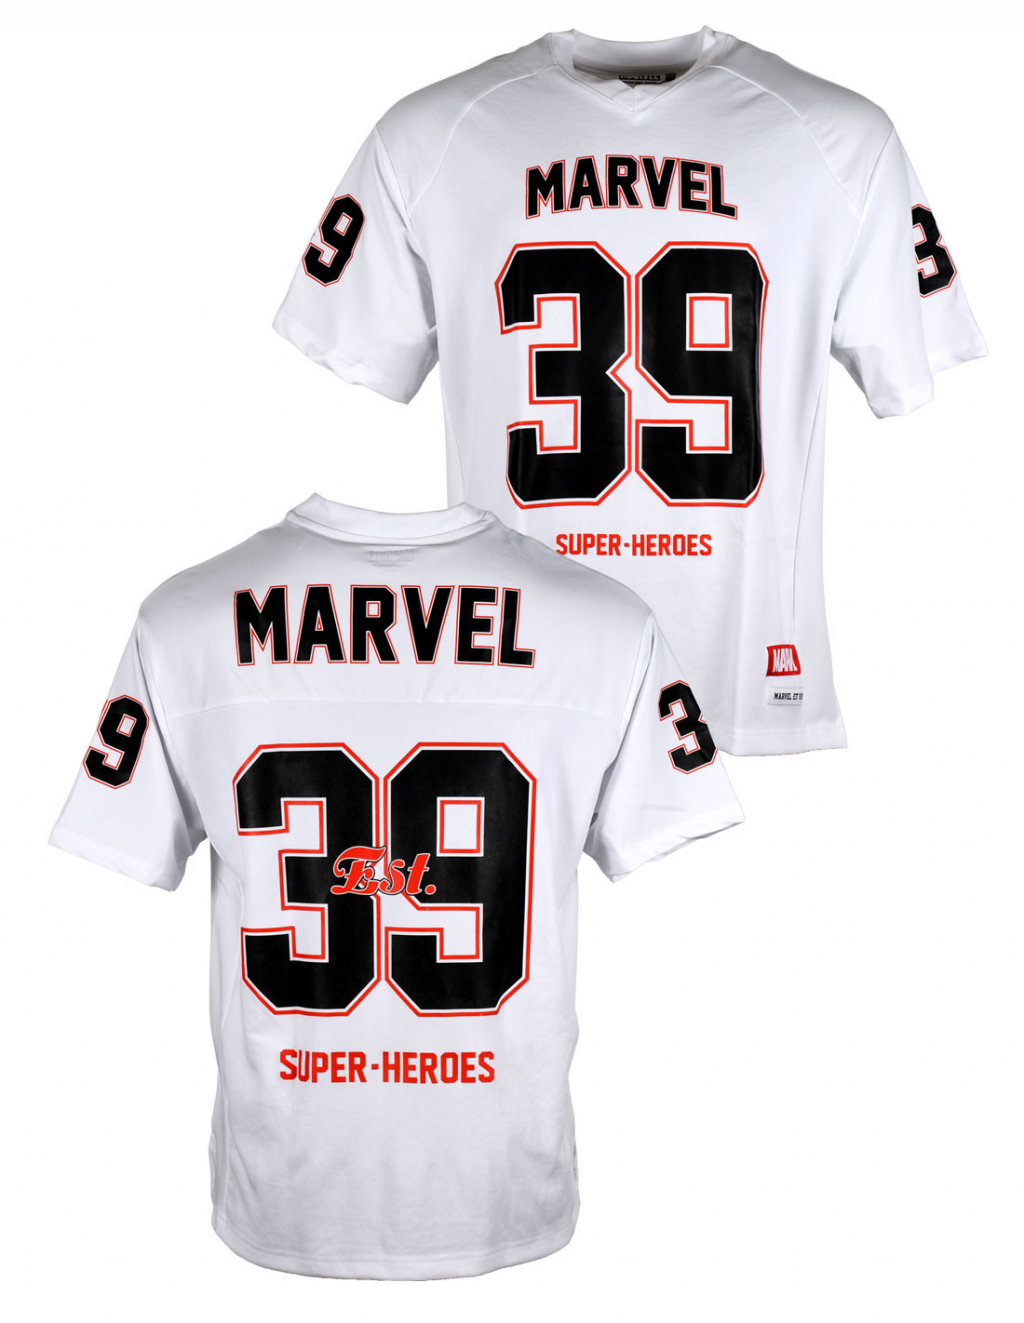 MARVEL - Super Heroes - T-Shirt Sports US Replica unisex (M)